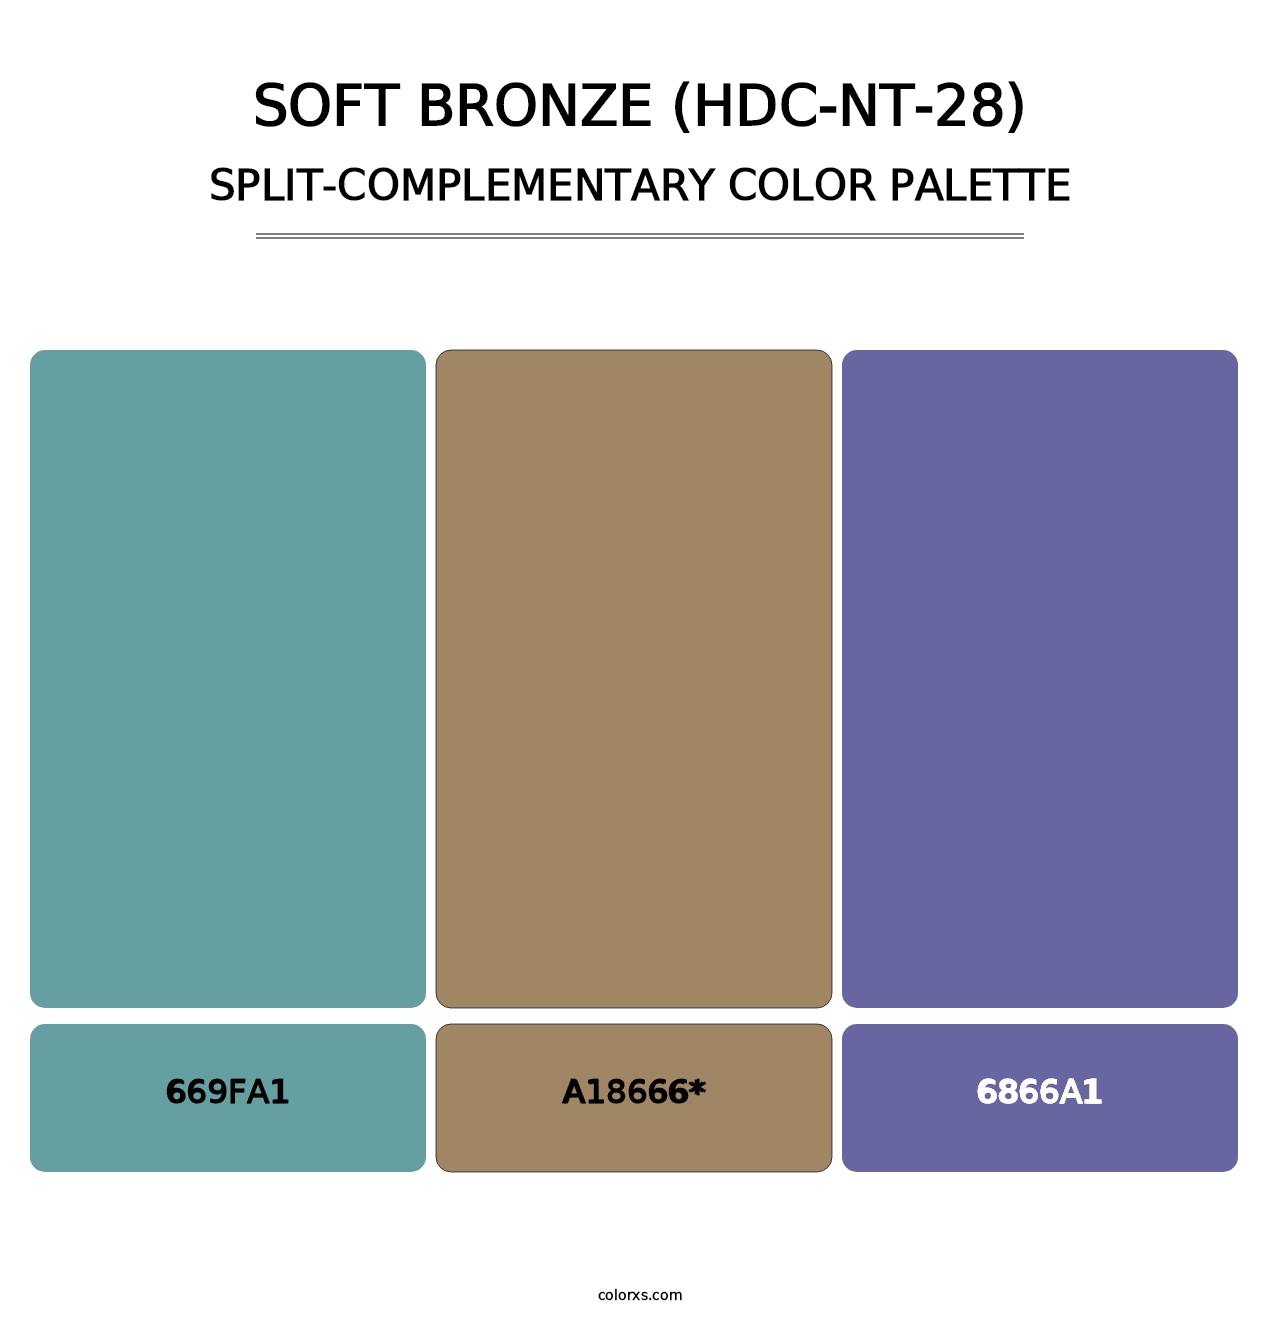 Soft Bronze (HDC-NT-28) - Split-Complementary Color Palette